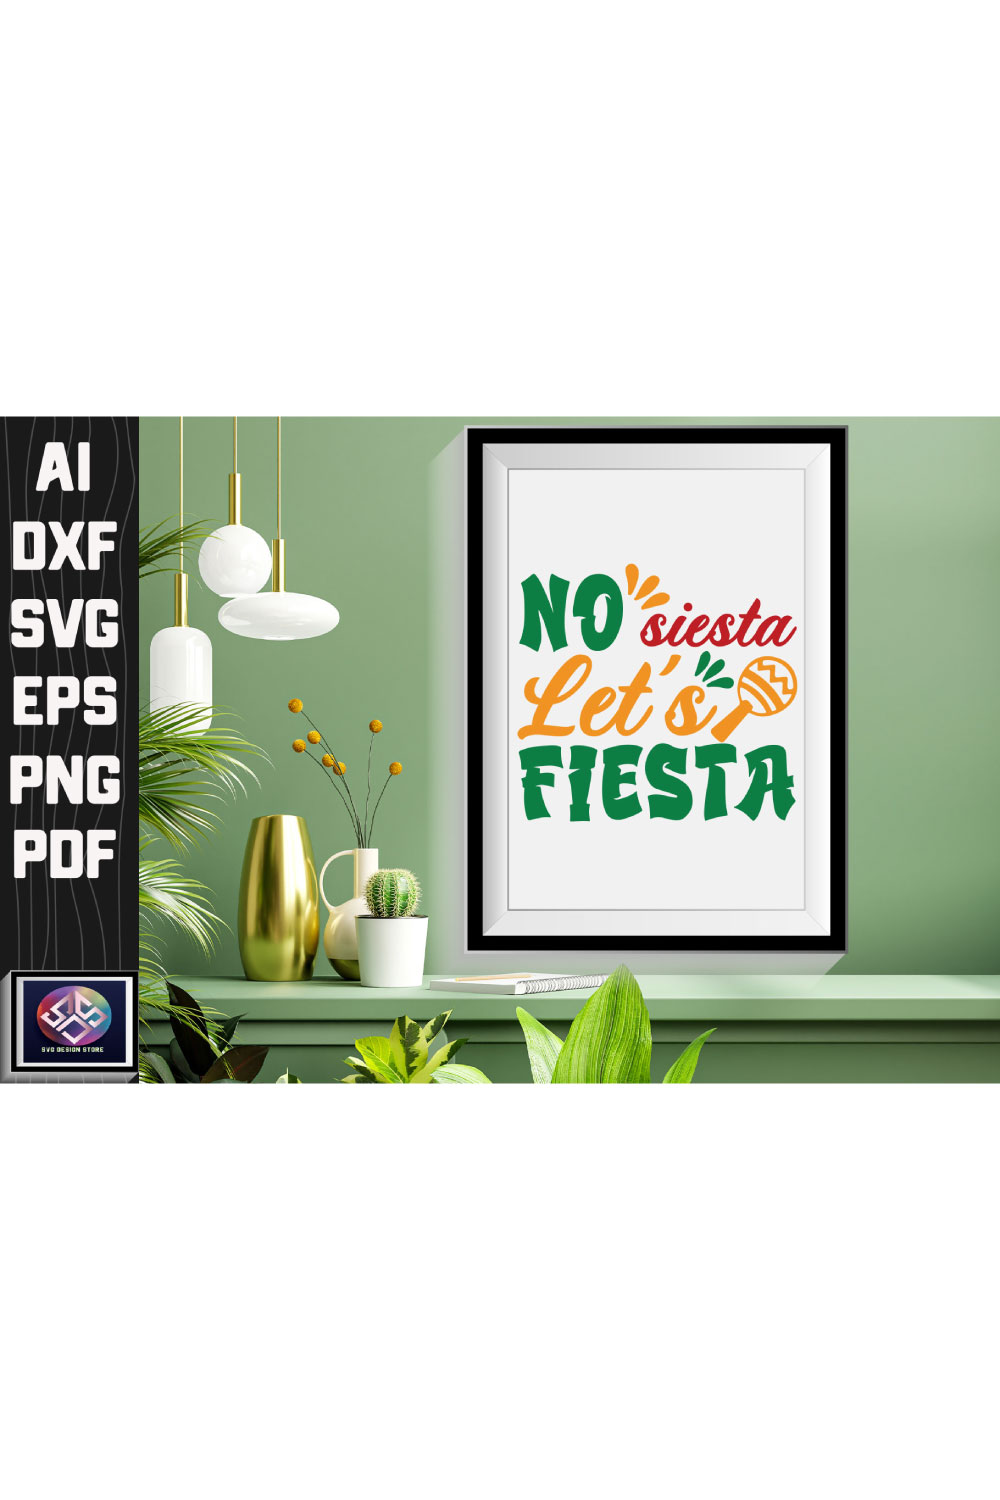 No Siesta Let’s Fiesta pinterest preview image.